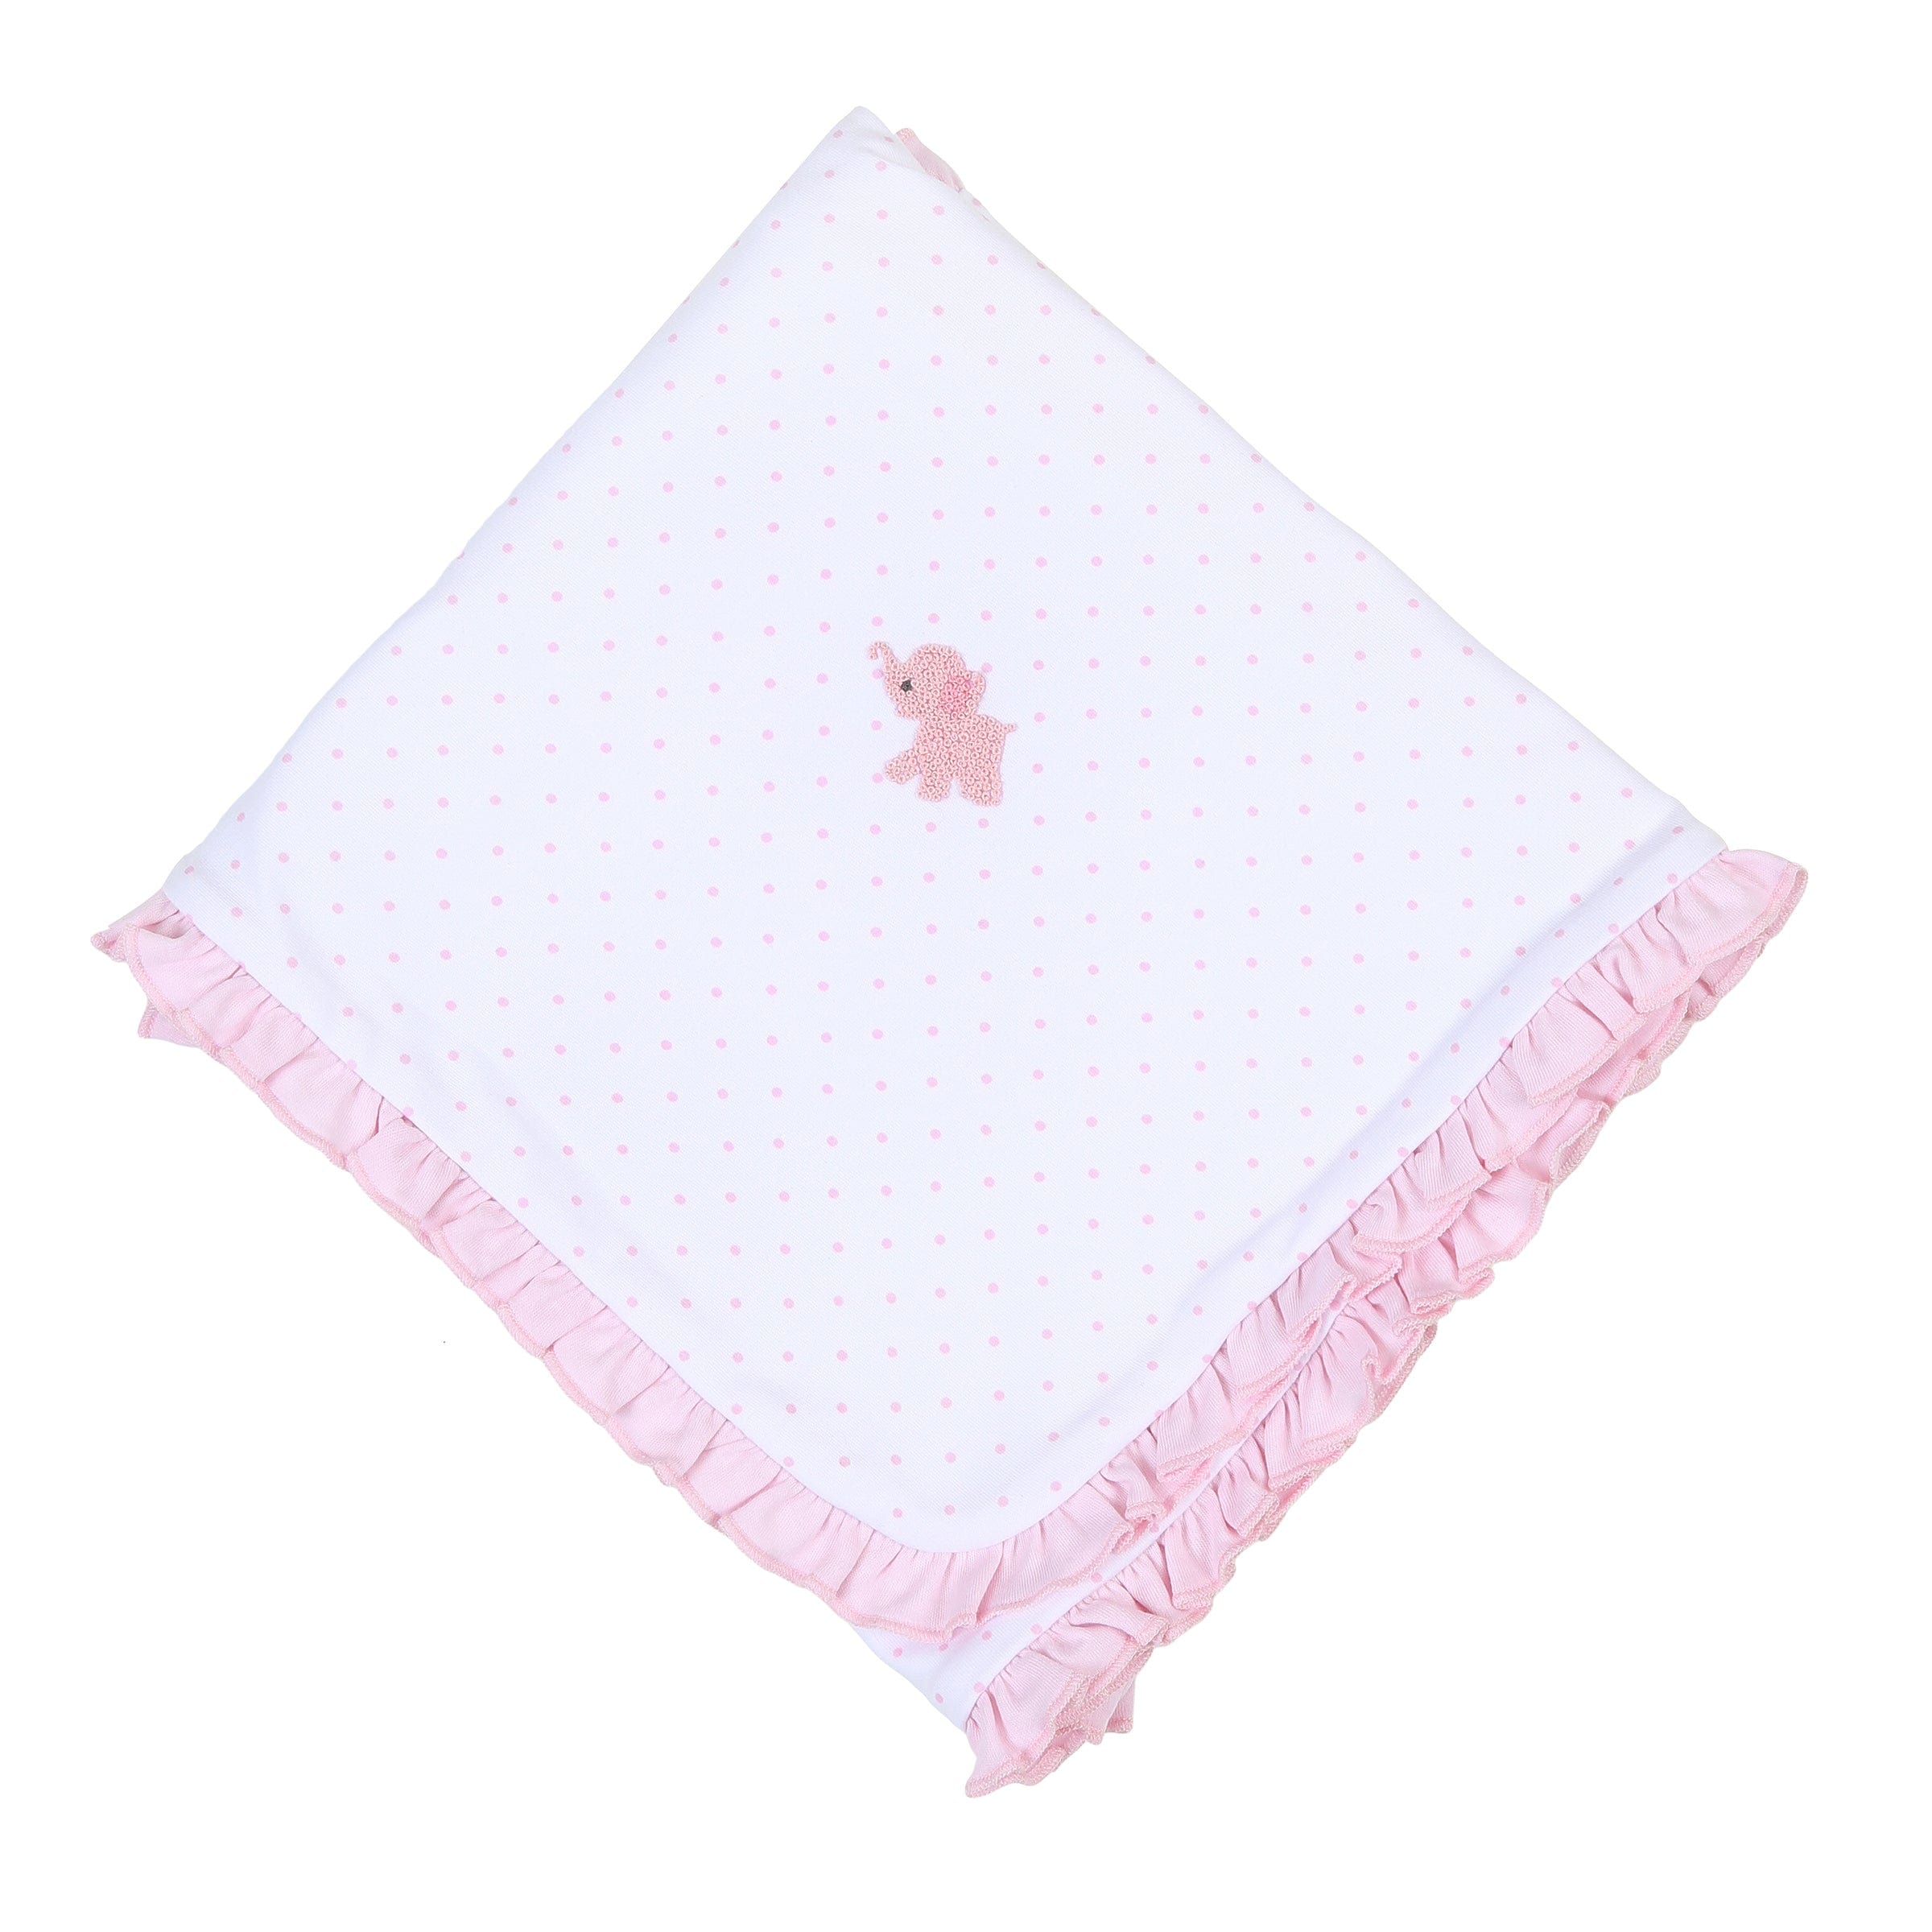 MAGNOLIA BABY - Tiny Elephant Receiving Blanket - Pink